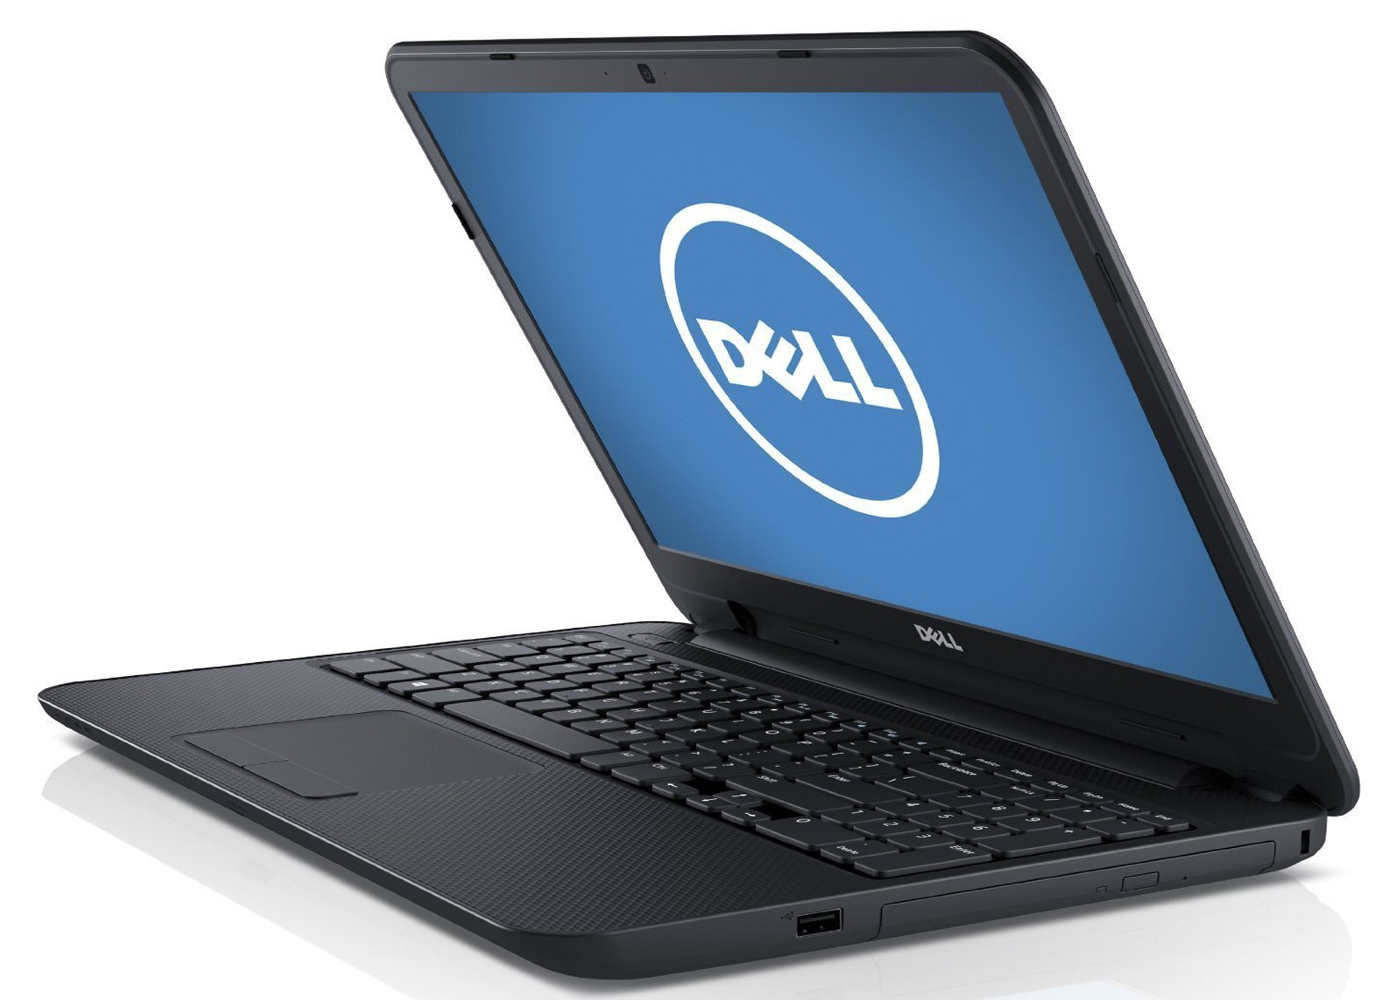 Dell Inspiron 15 3521 15.6-inch Laptop (Black)